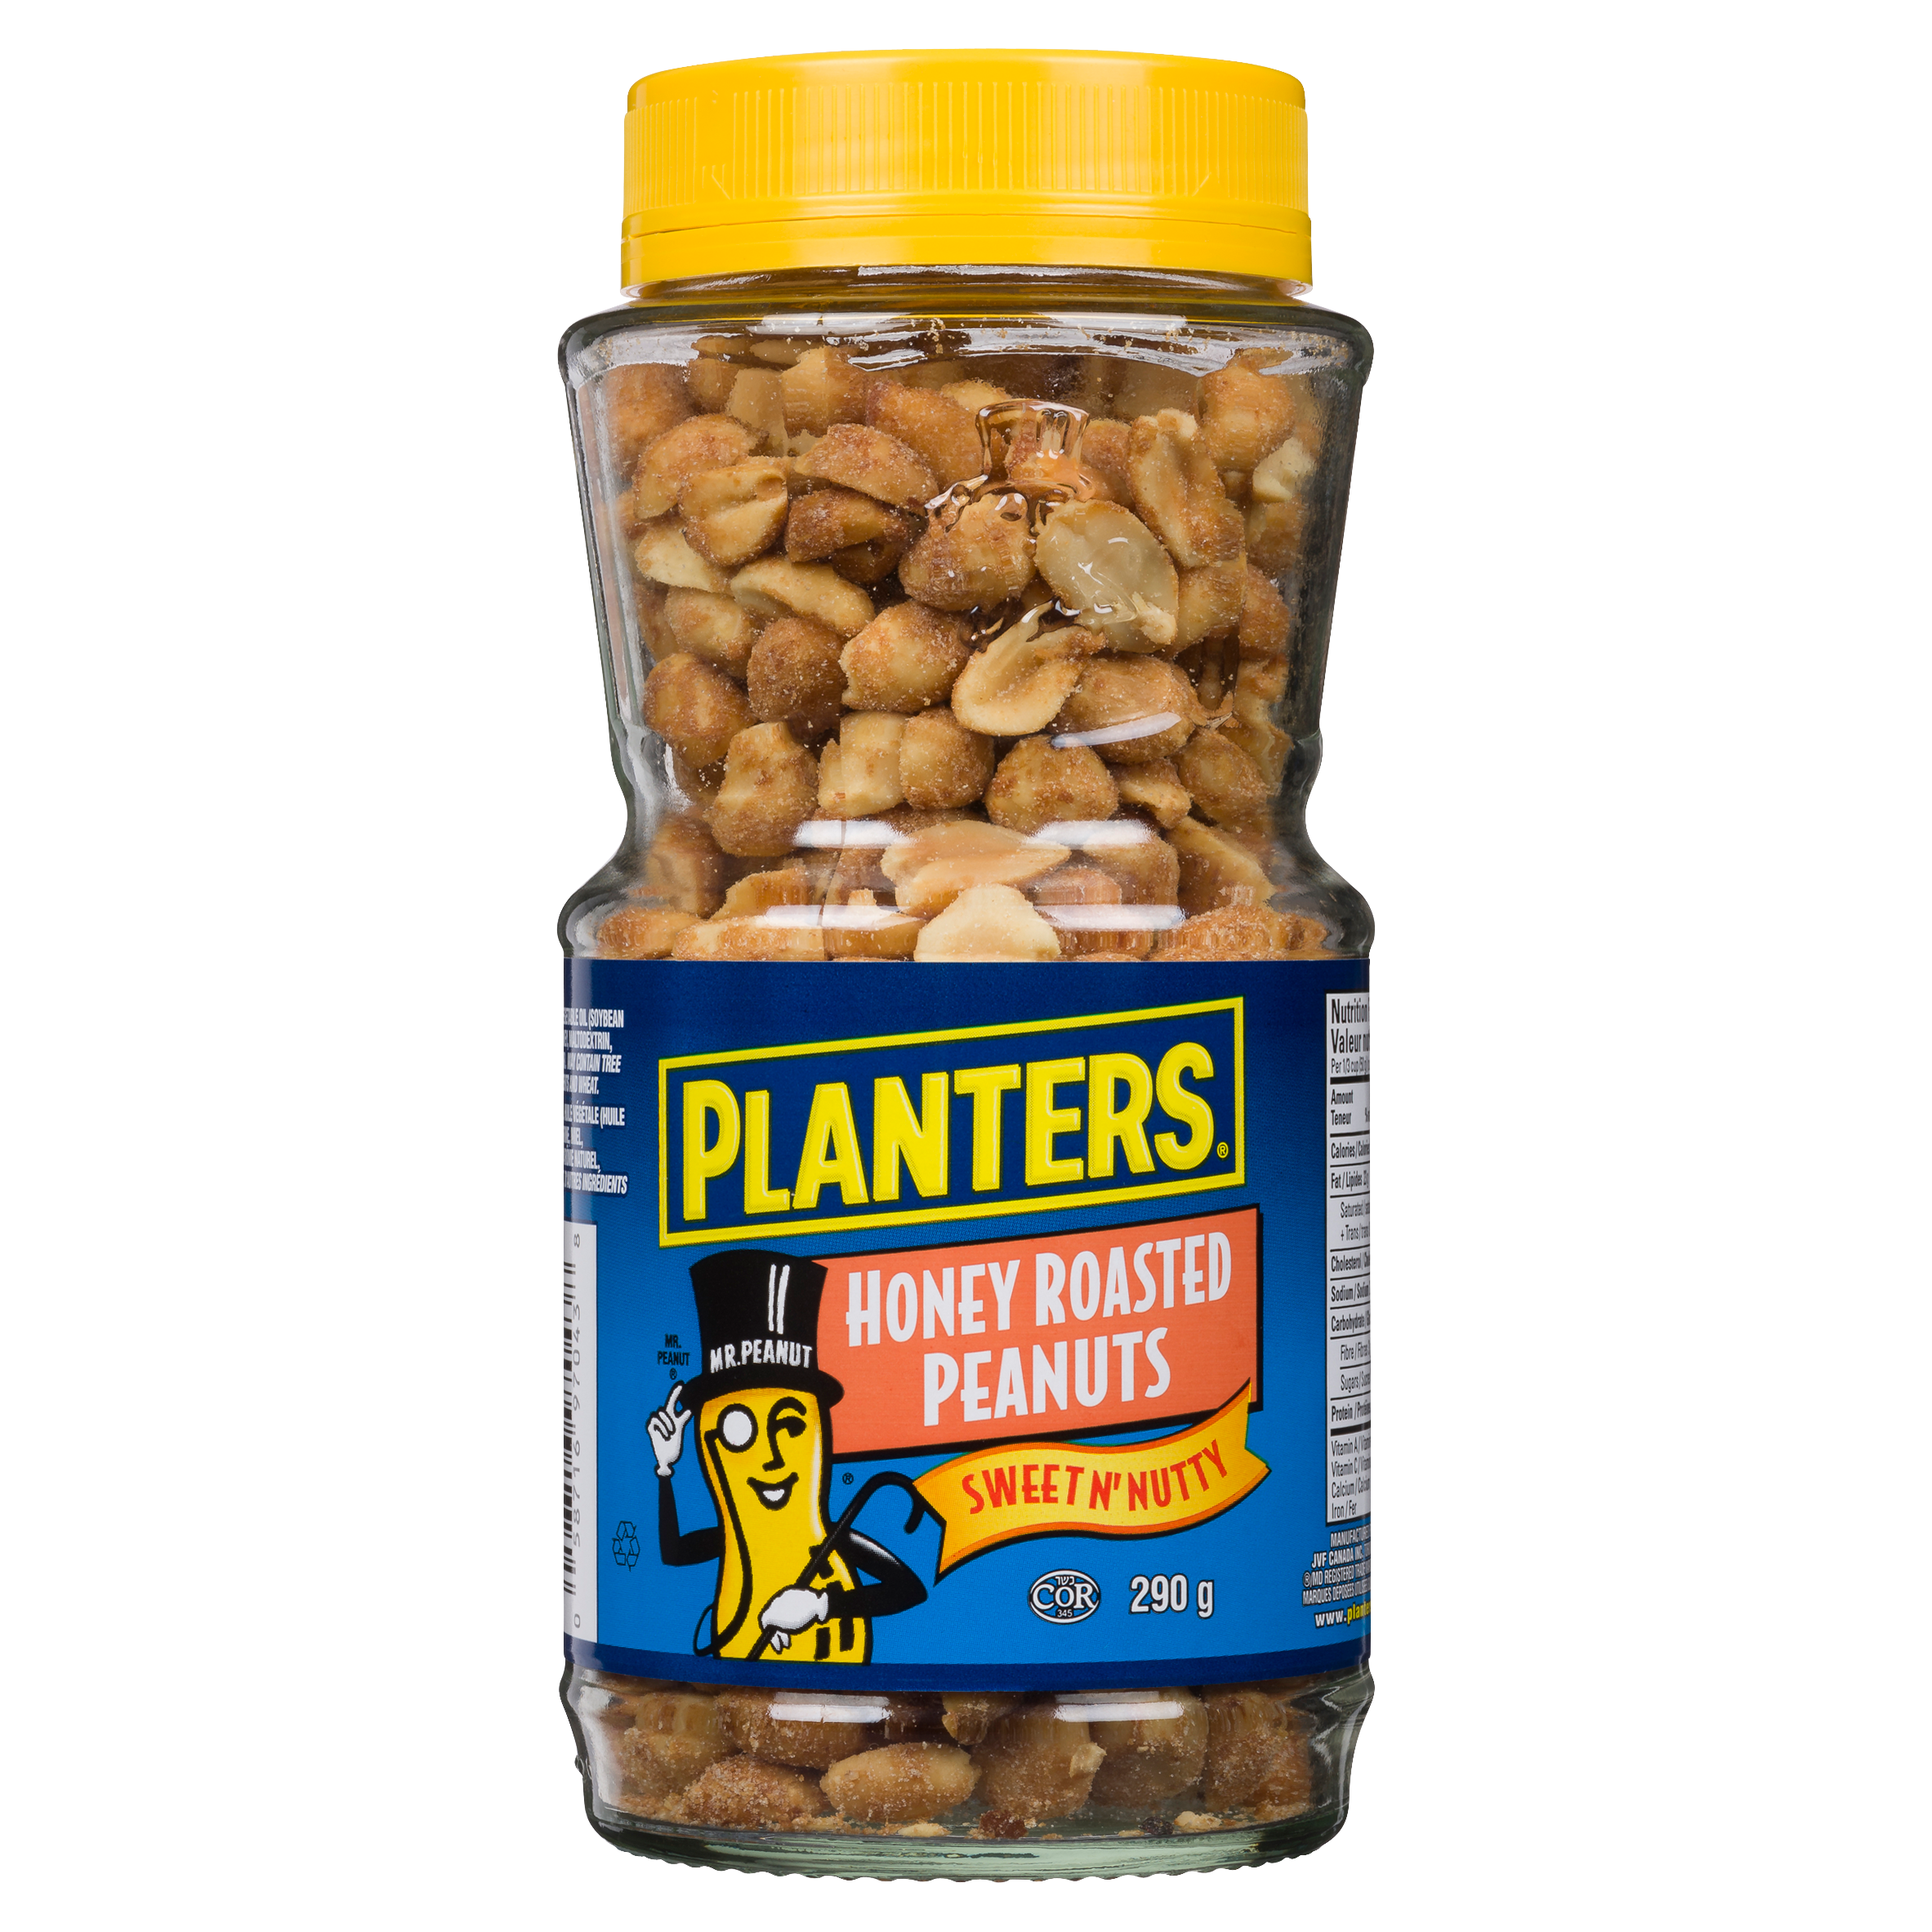 Planters Honey Roasted Peanuts Sweet N' Nutty 290 g